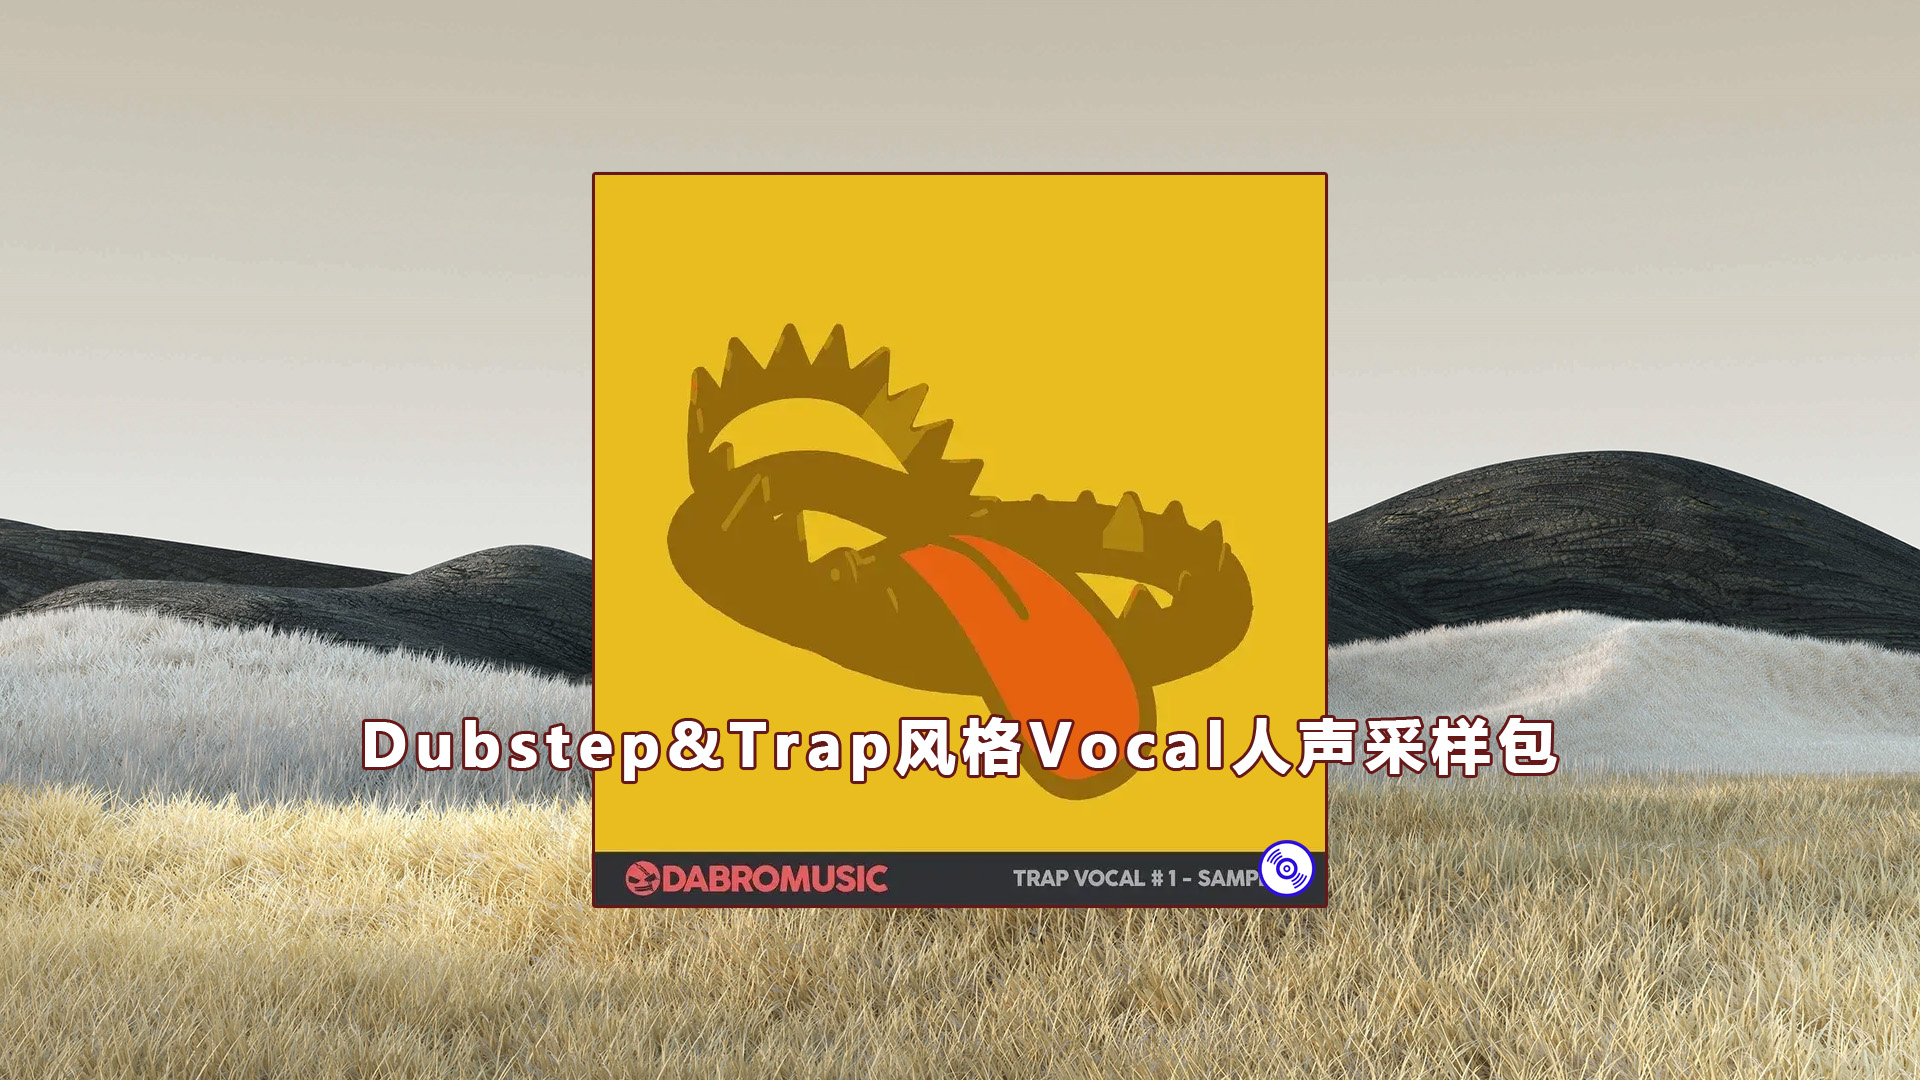 【Dubstep&Trap风格Vocal人声采样包】Music Trap Vocal Samples